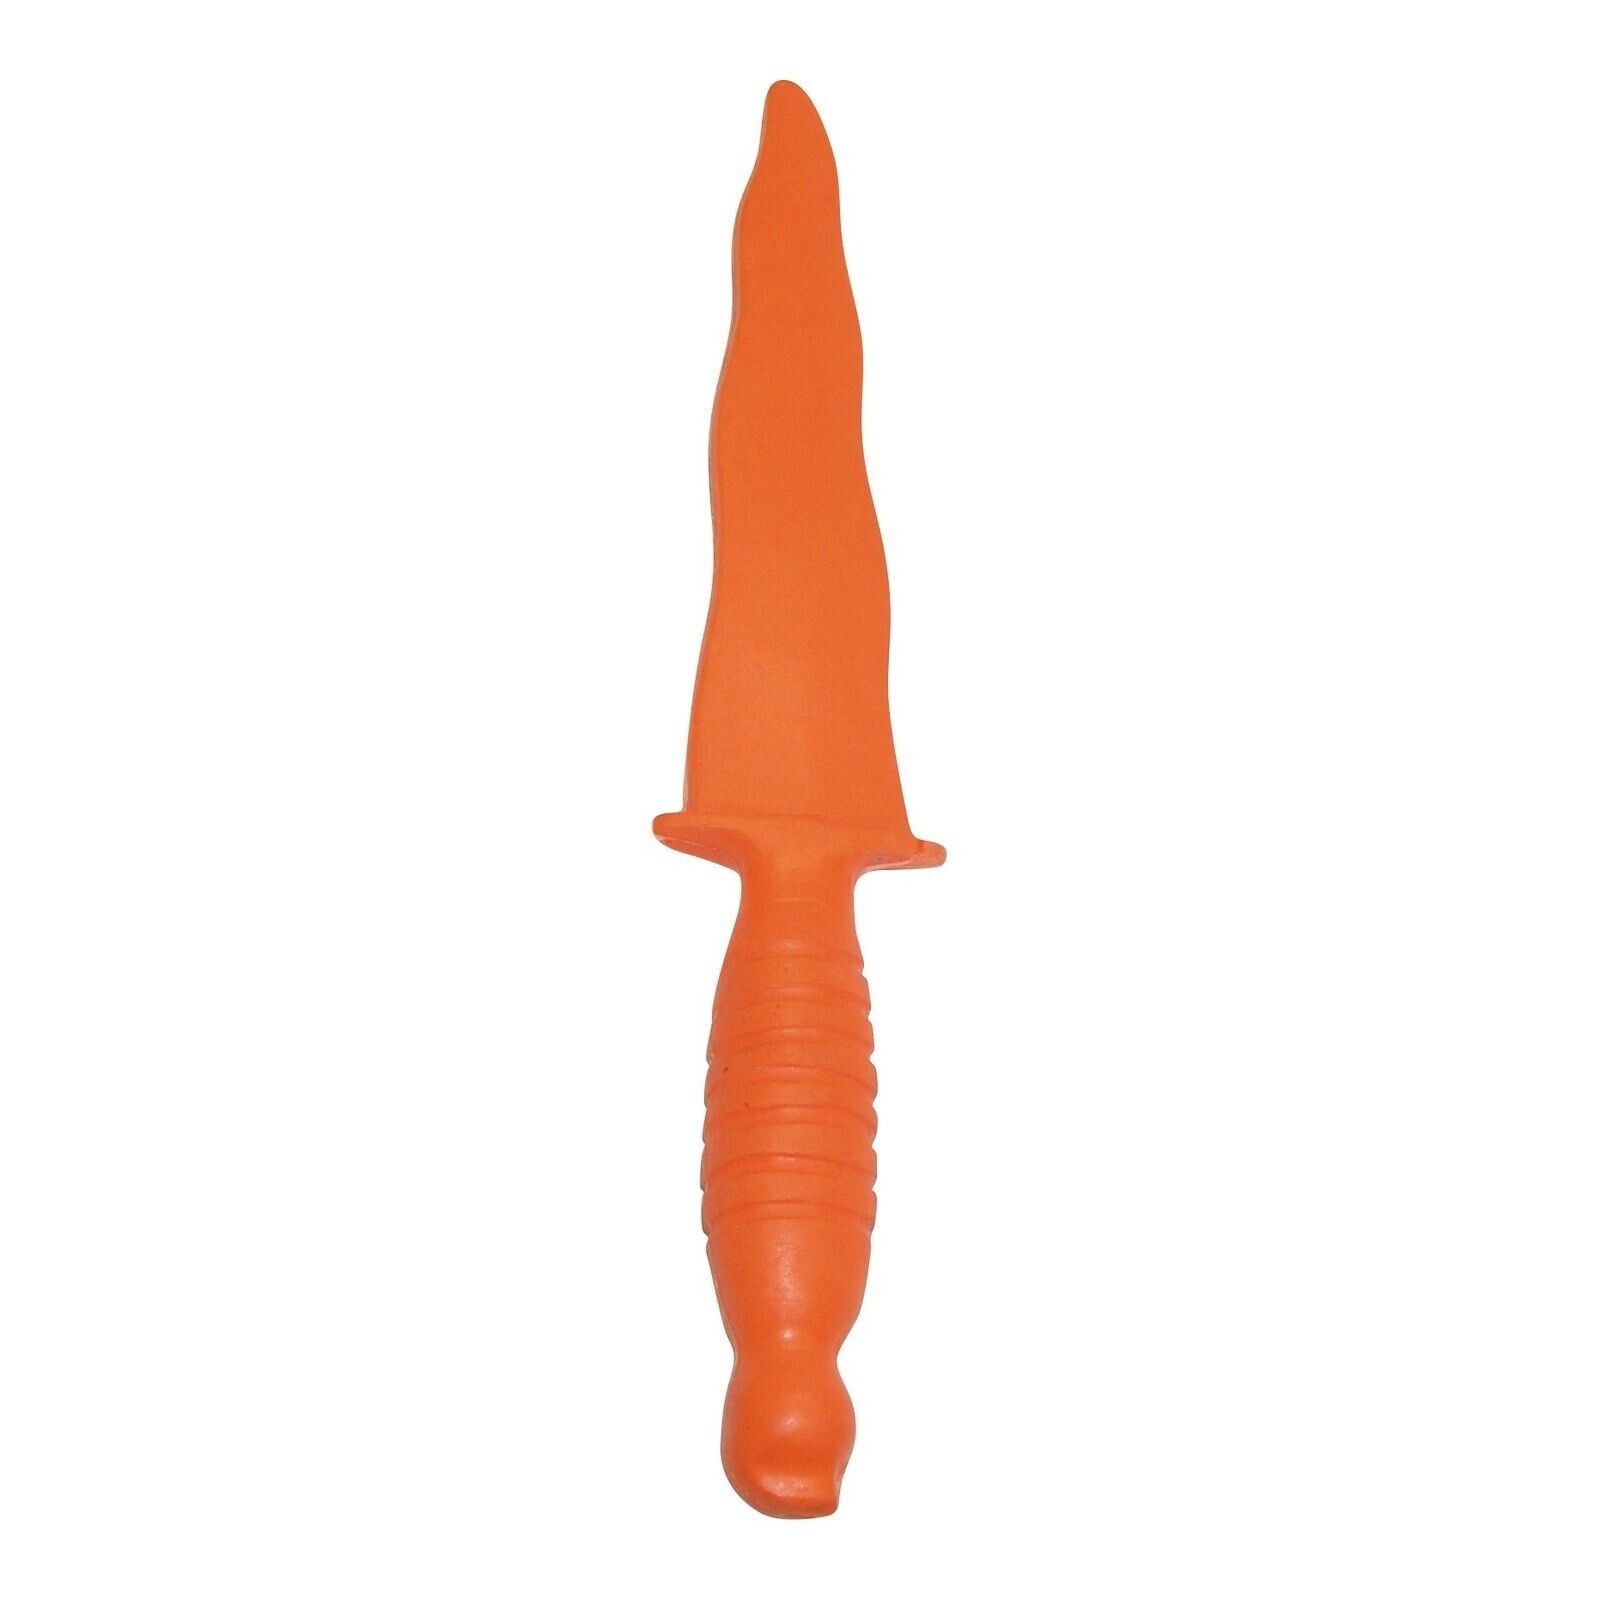 Ronin Gear Rubber Usa Rubber 13" Kris Dagger Knife Safety Orange Escrima Kali